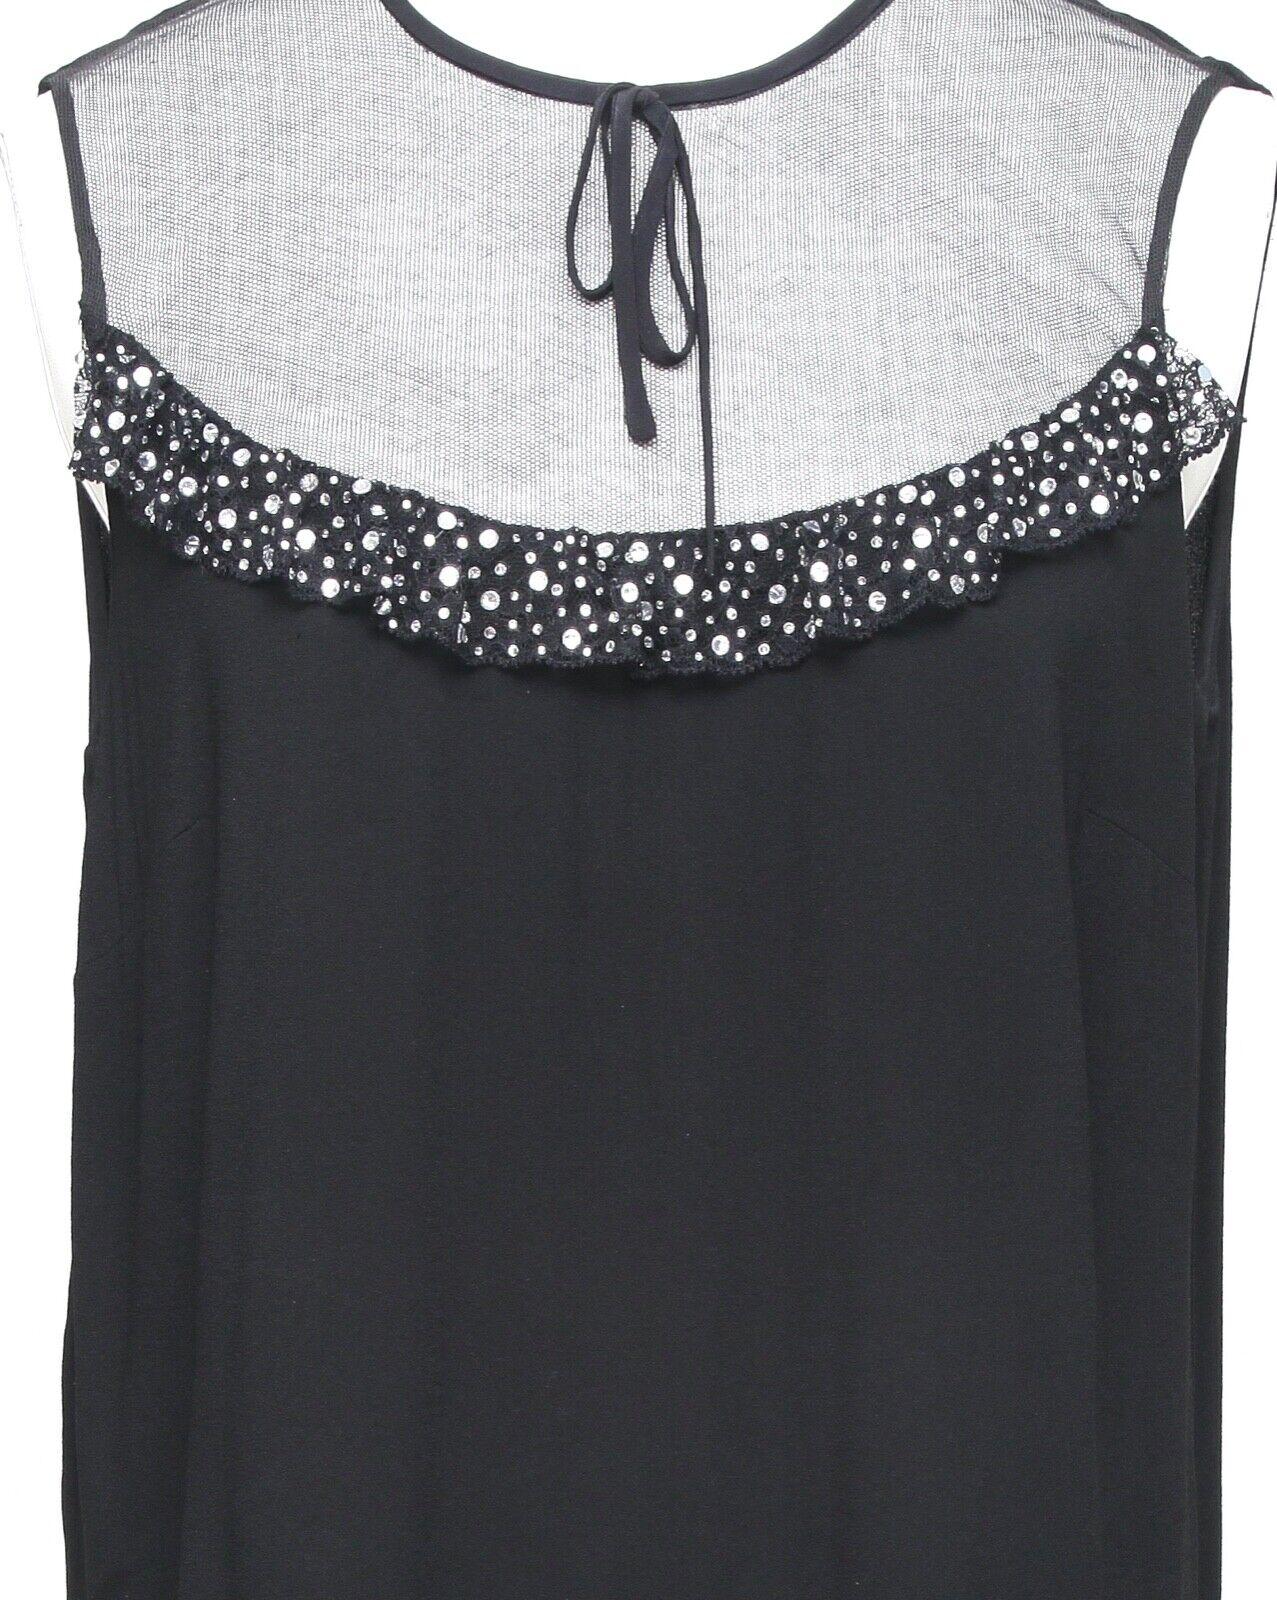 MIU MIU Top Blouse Shirt Sleeveless Black Viscose Tie Sequin Sz 42 NWT For Sale 1